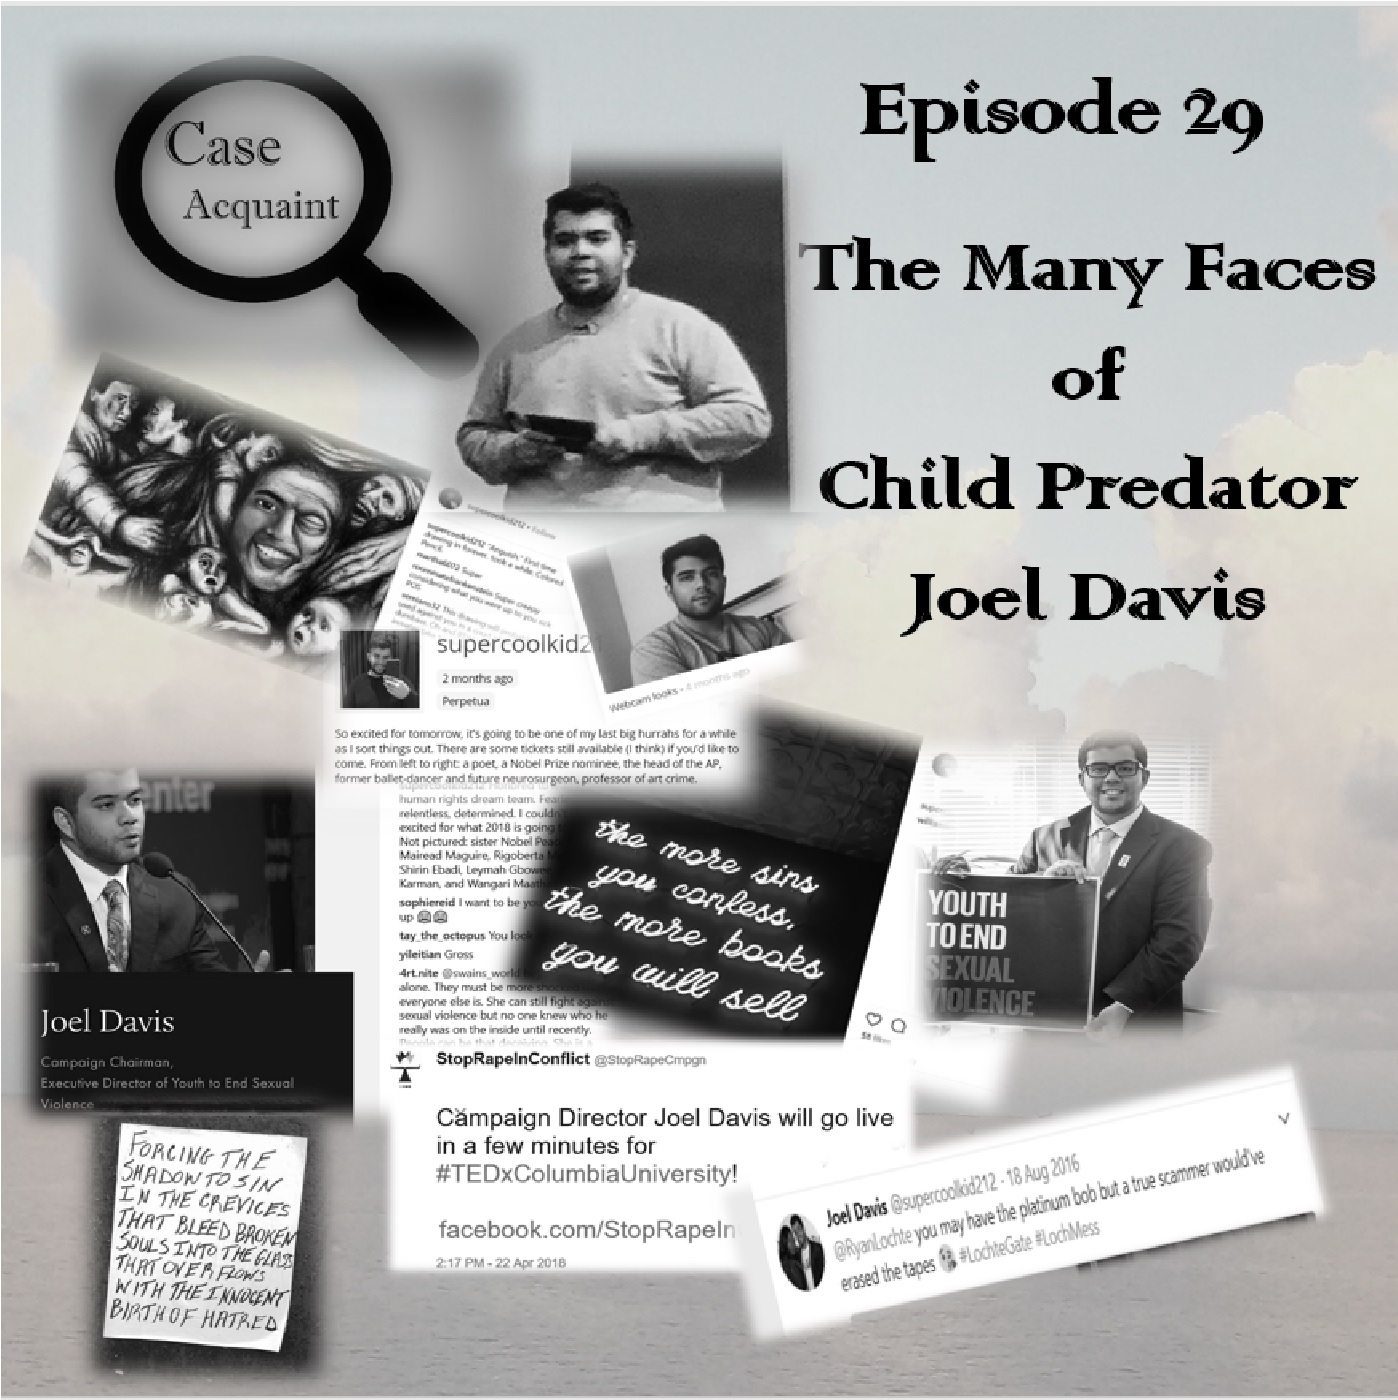 Episode 29 The Many Faces of Child Predator Joel Davis